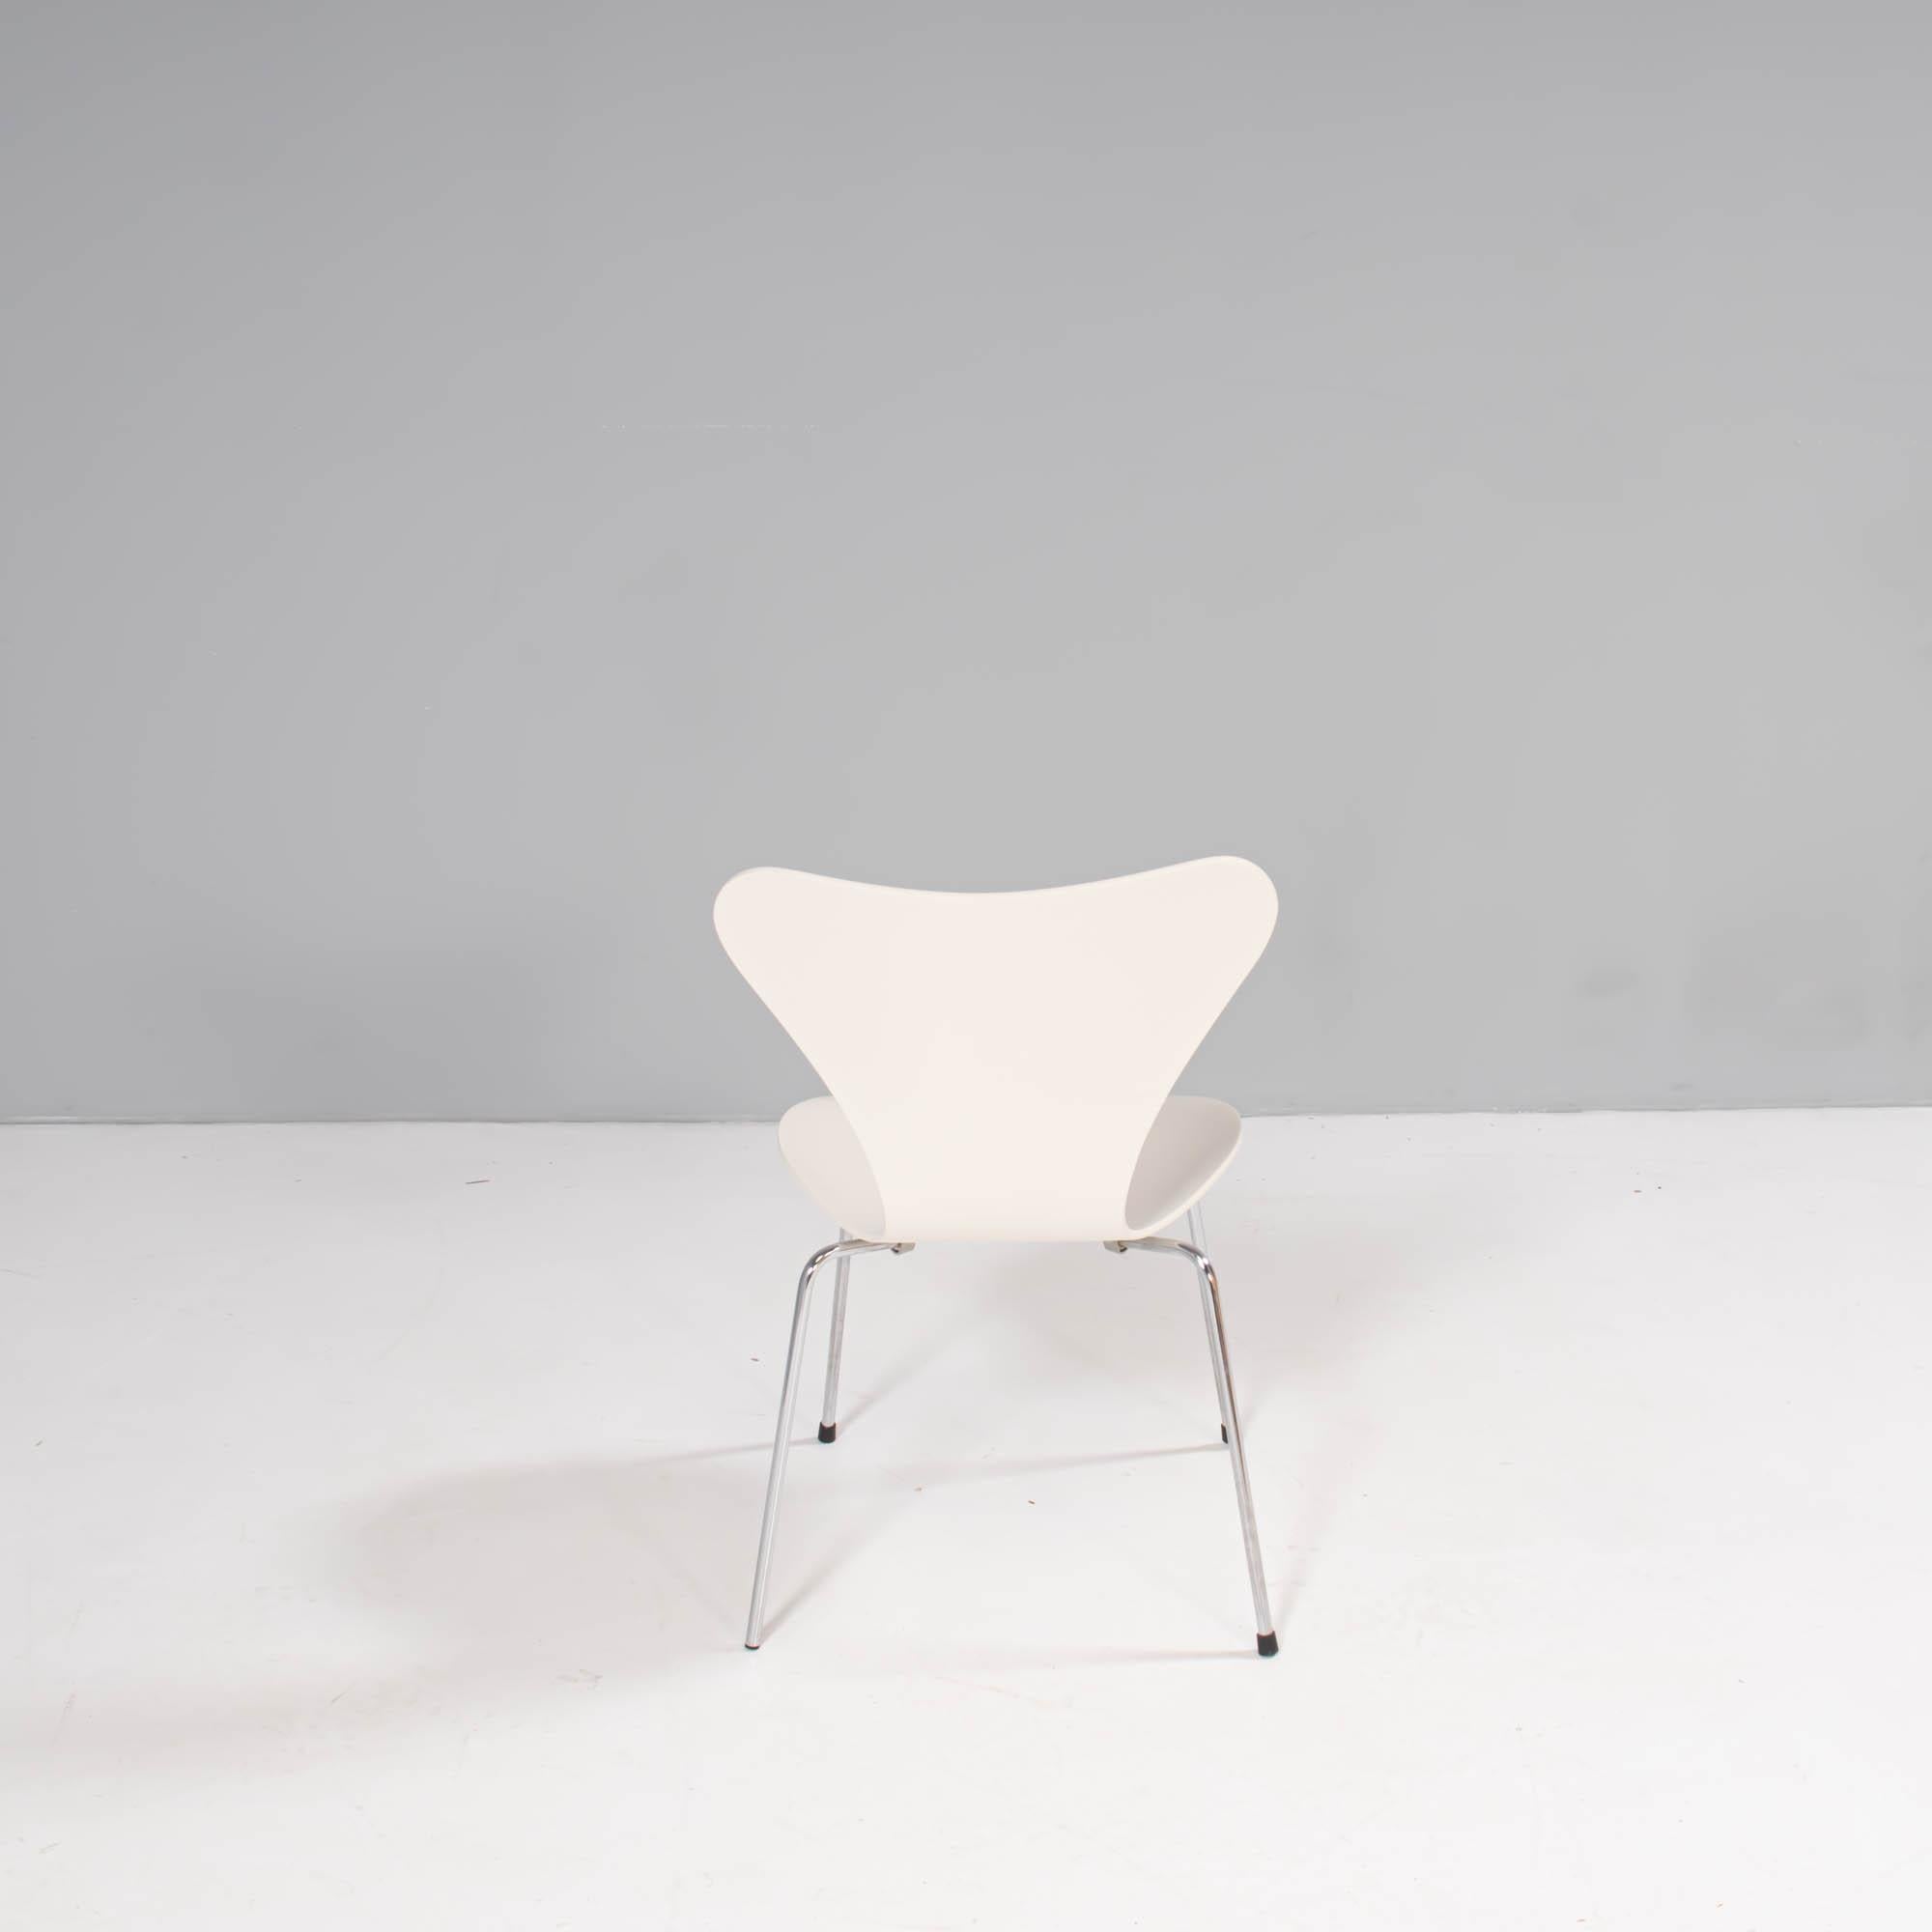 Late 20th Century Arne Jacobsen for Fritz Hansen White Series 7 Dining Chairs